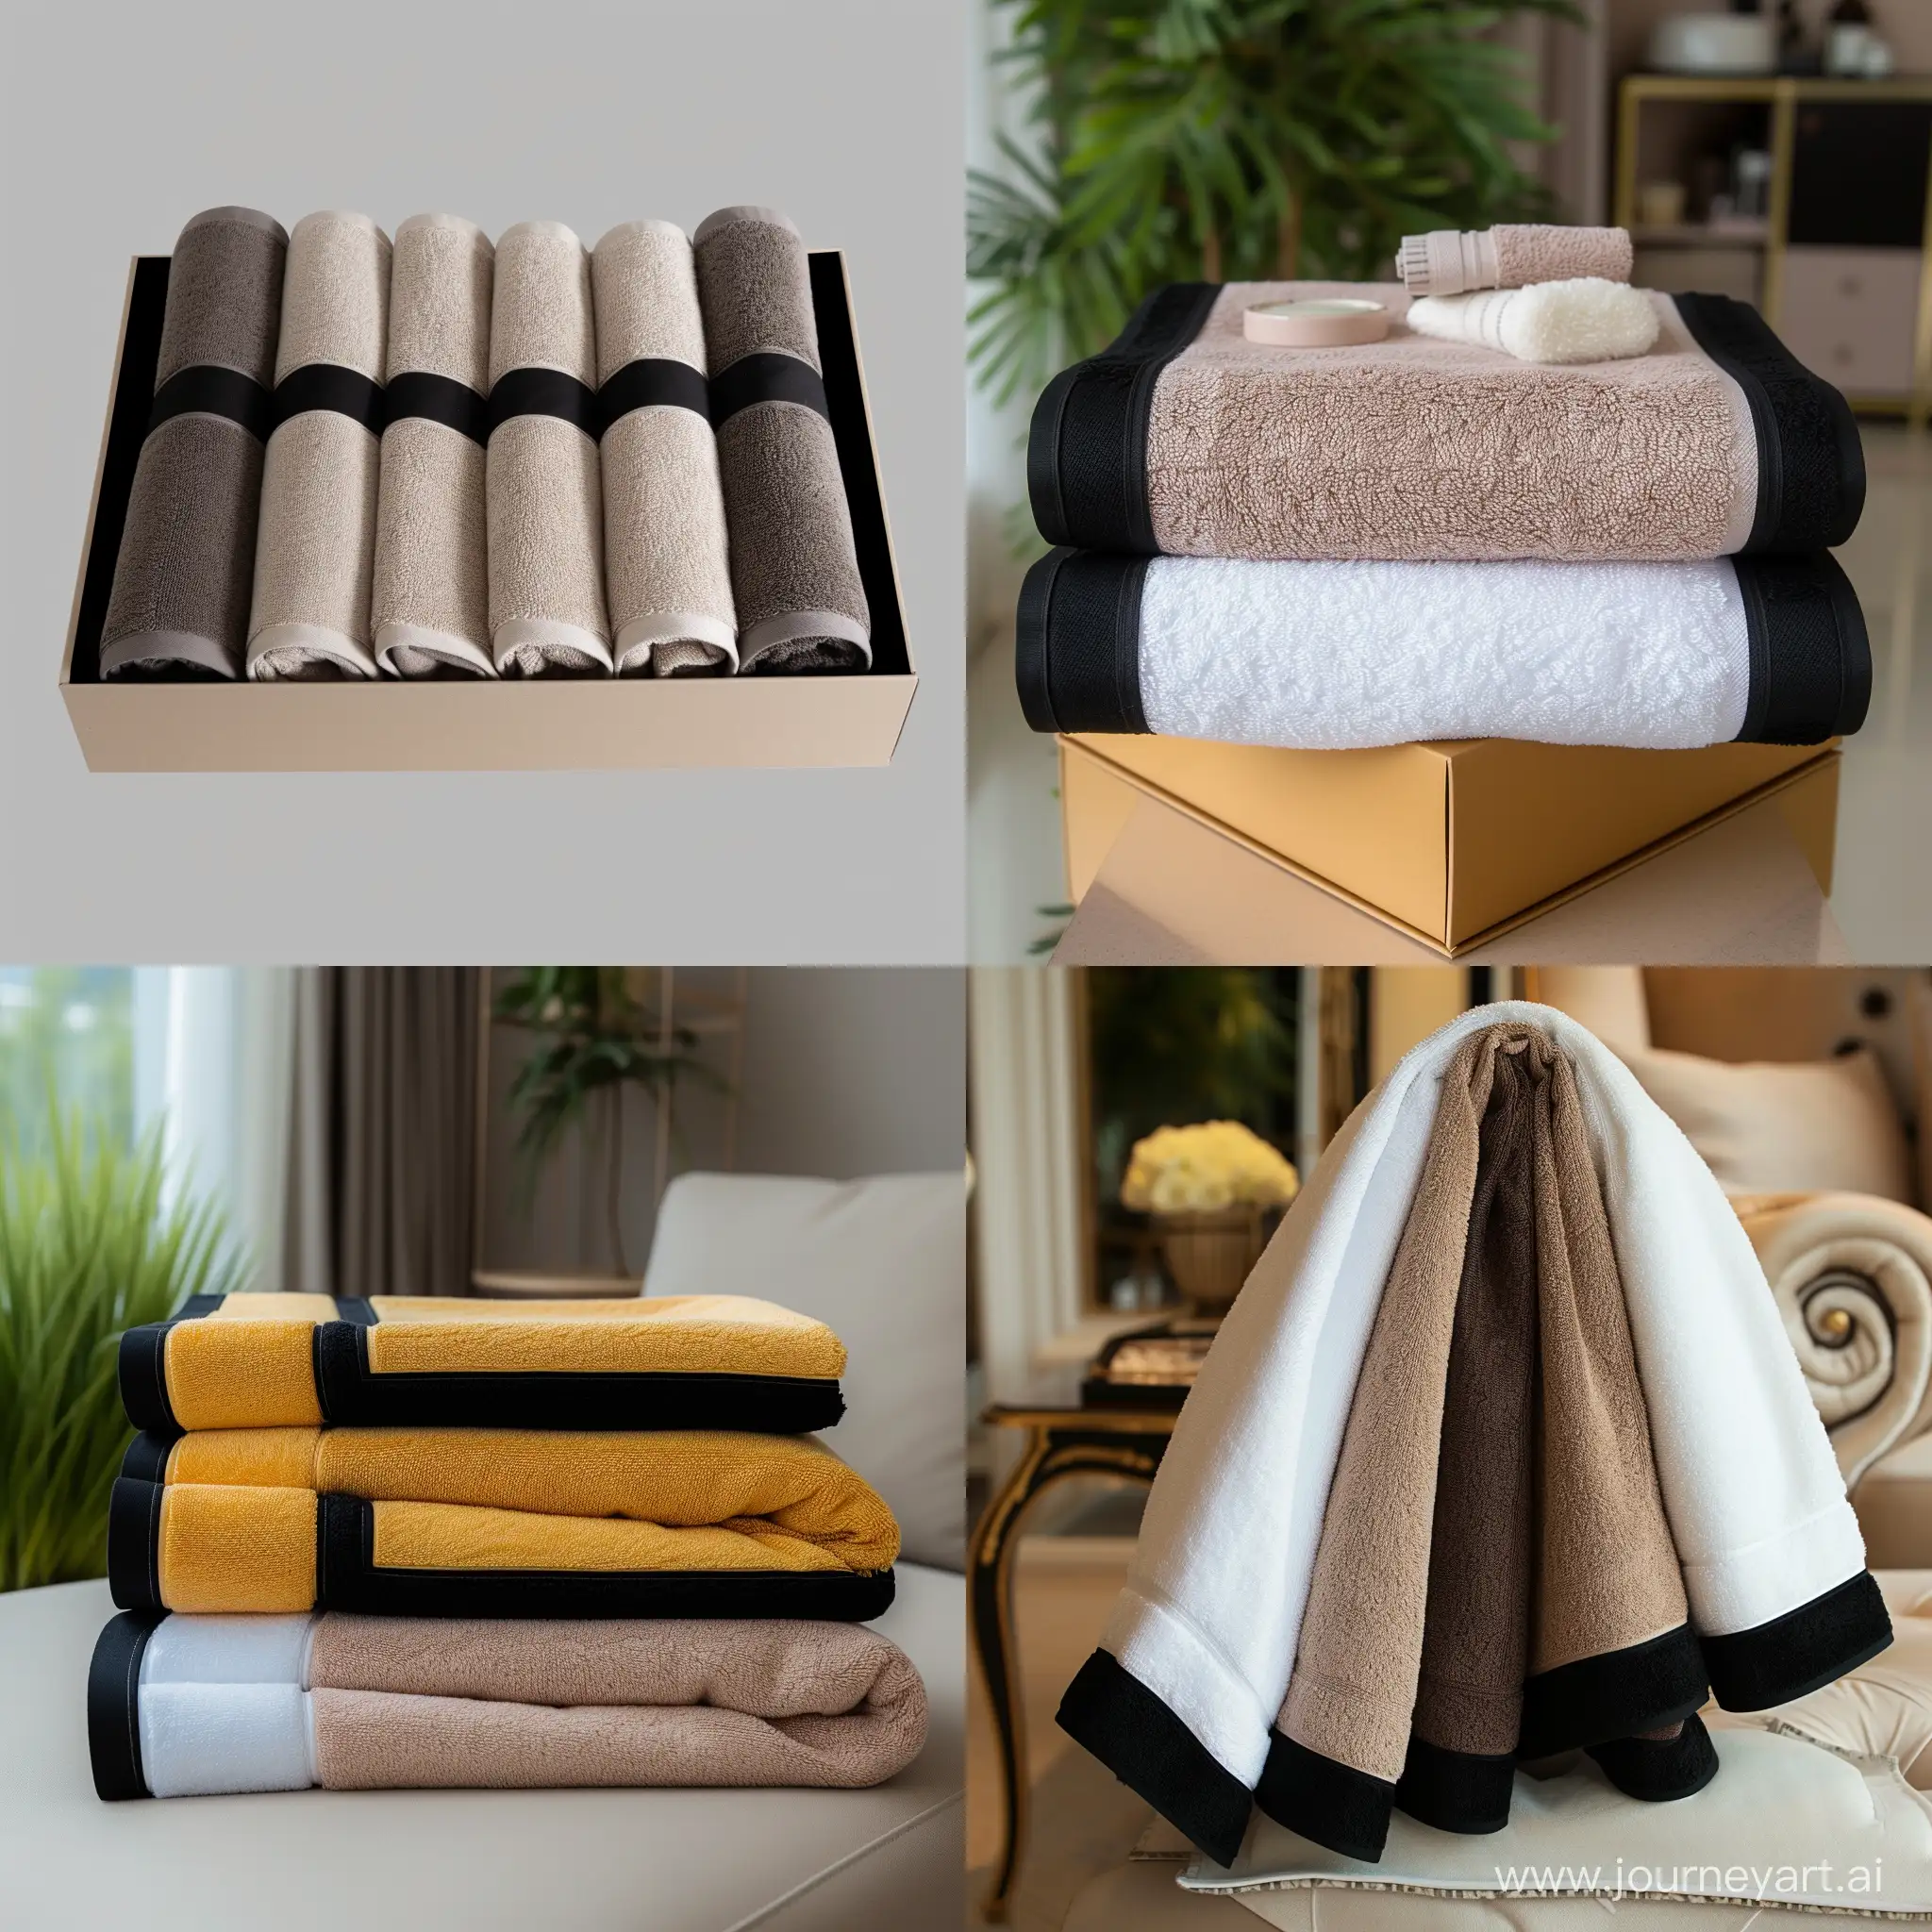 Luxurious-BlackEdged-Bath-Towels-Set-in-Elegant-Gift-Box-for-Stylish-Living